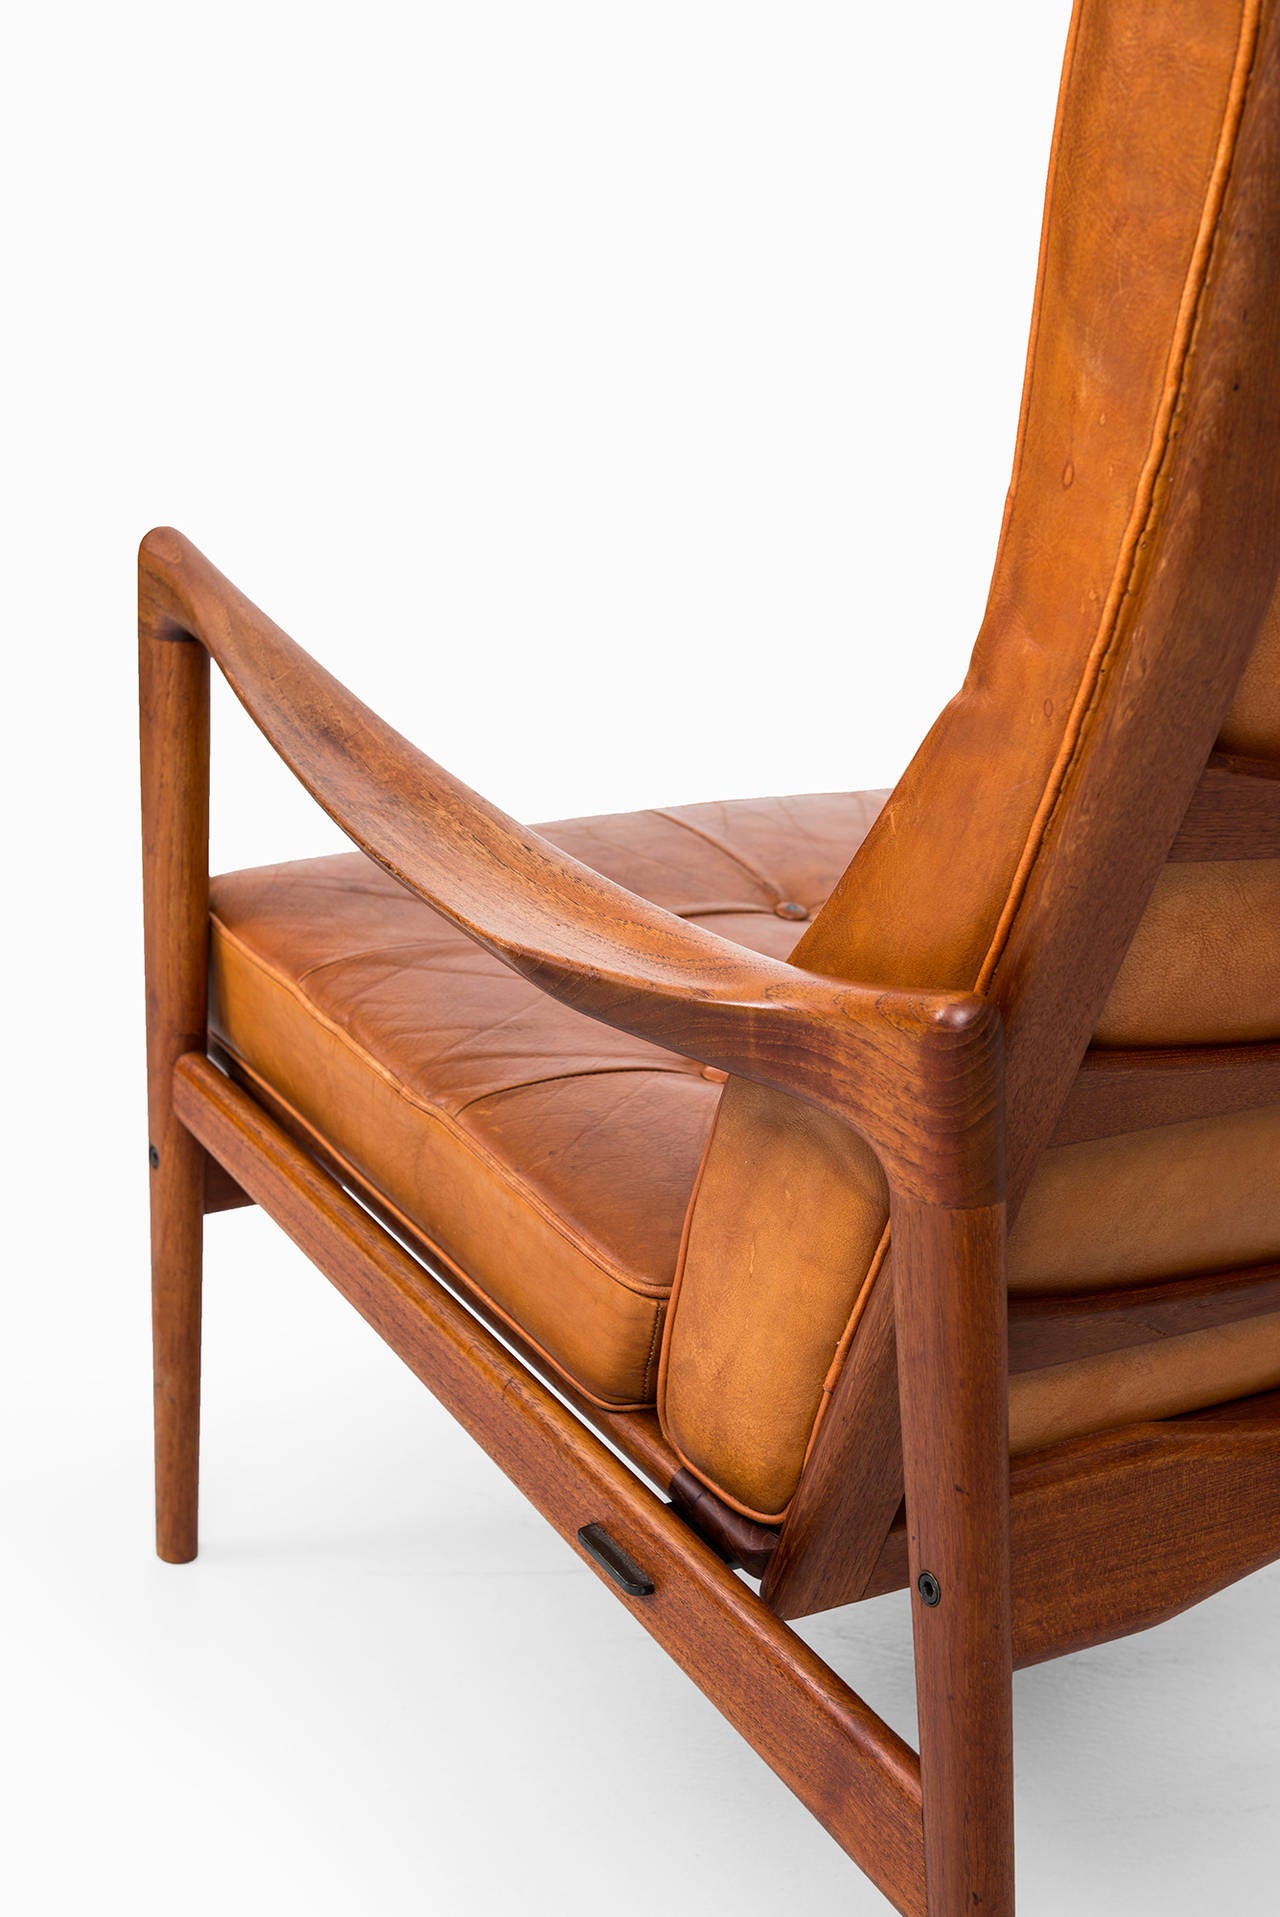 Leather Ib Kofod-Larsen Easy Chair Model Örenäs by OPE in Sweden